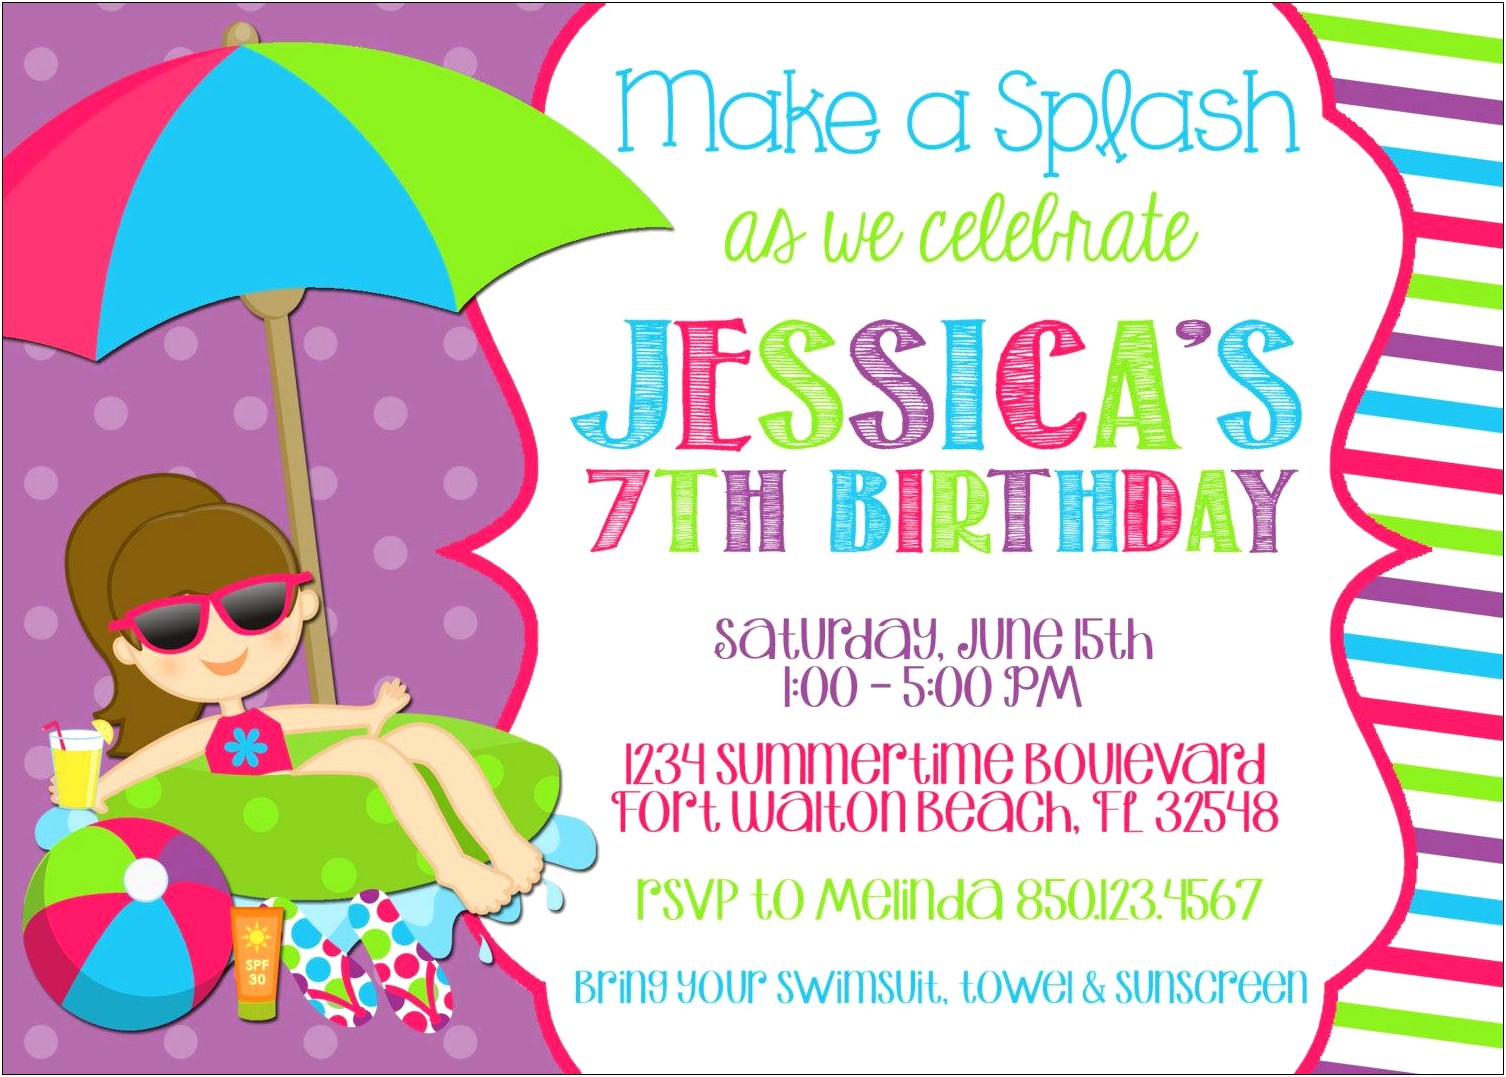 Free Printable Birthday Party Invitations Templates